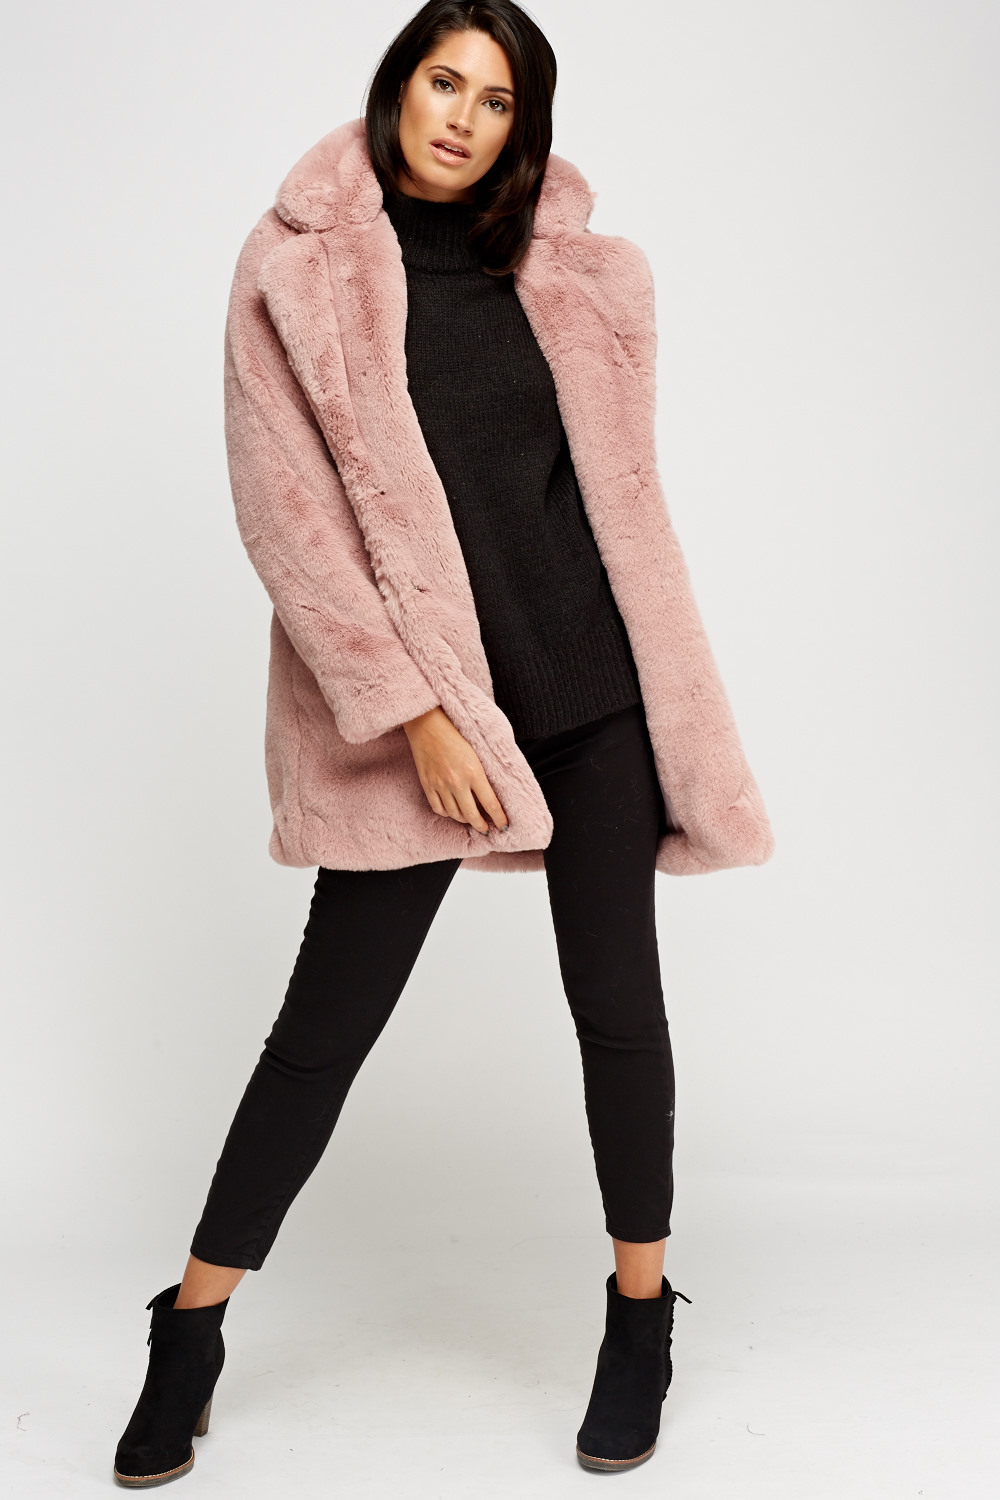 K.ZELL Dusty Pink Teddy Bear Faux Fur Coat - Limited edition | Discount ...